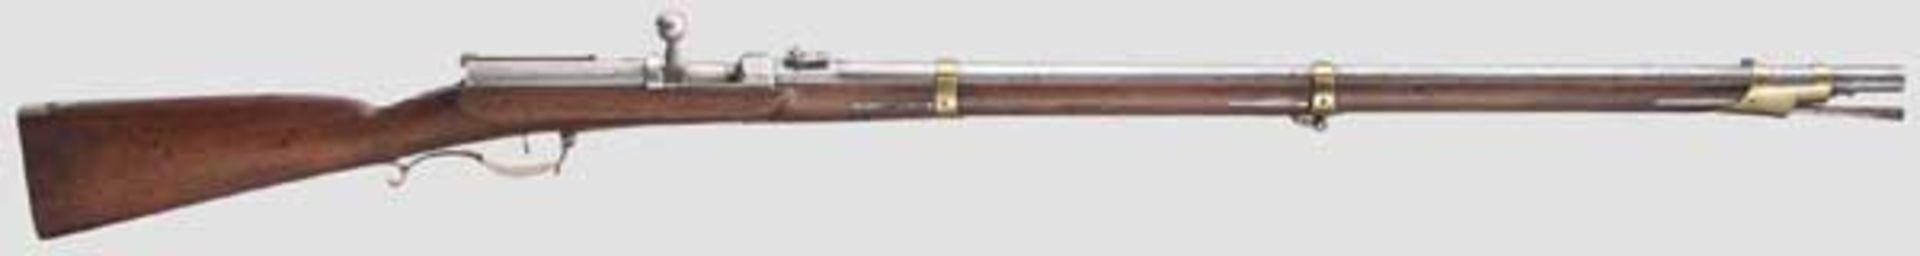 Zündnadelgewehr M 1841, 1. Fertigungsperiode Kaliber 15,4 mm, Nummer 436, nummerngleich (inkl. der